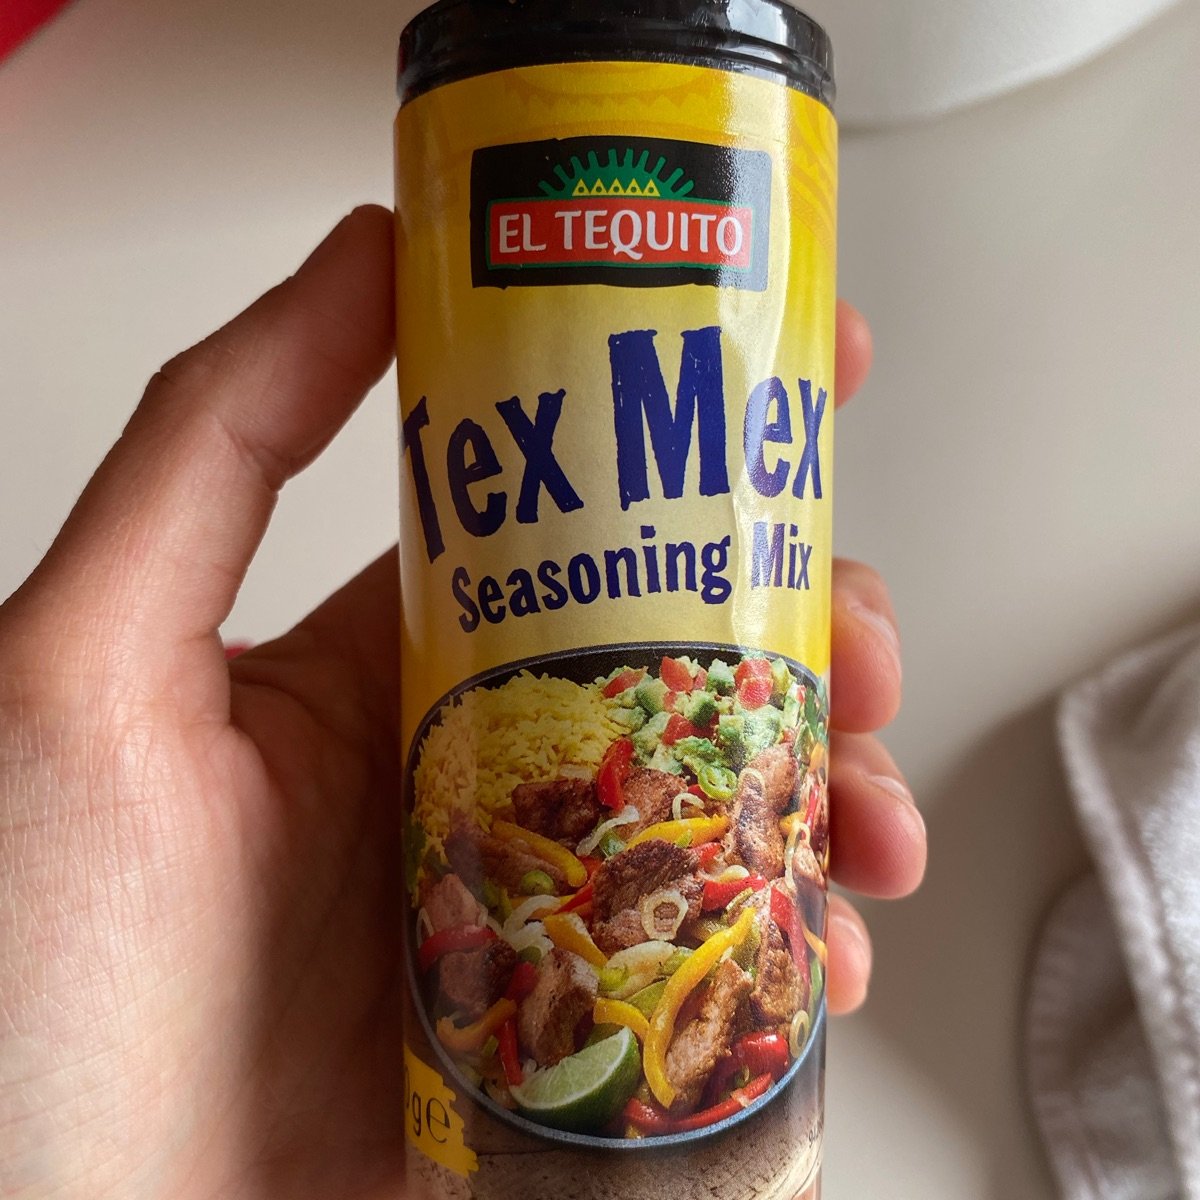 abillion Tex | Seasoning El Review Mix Mex Tequito